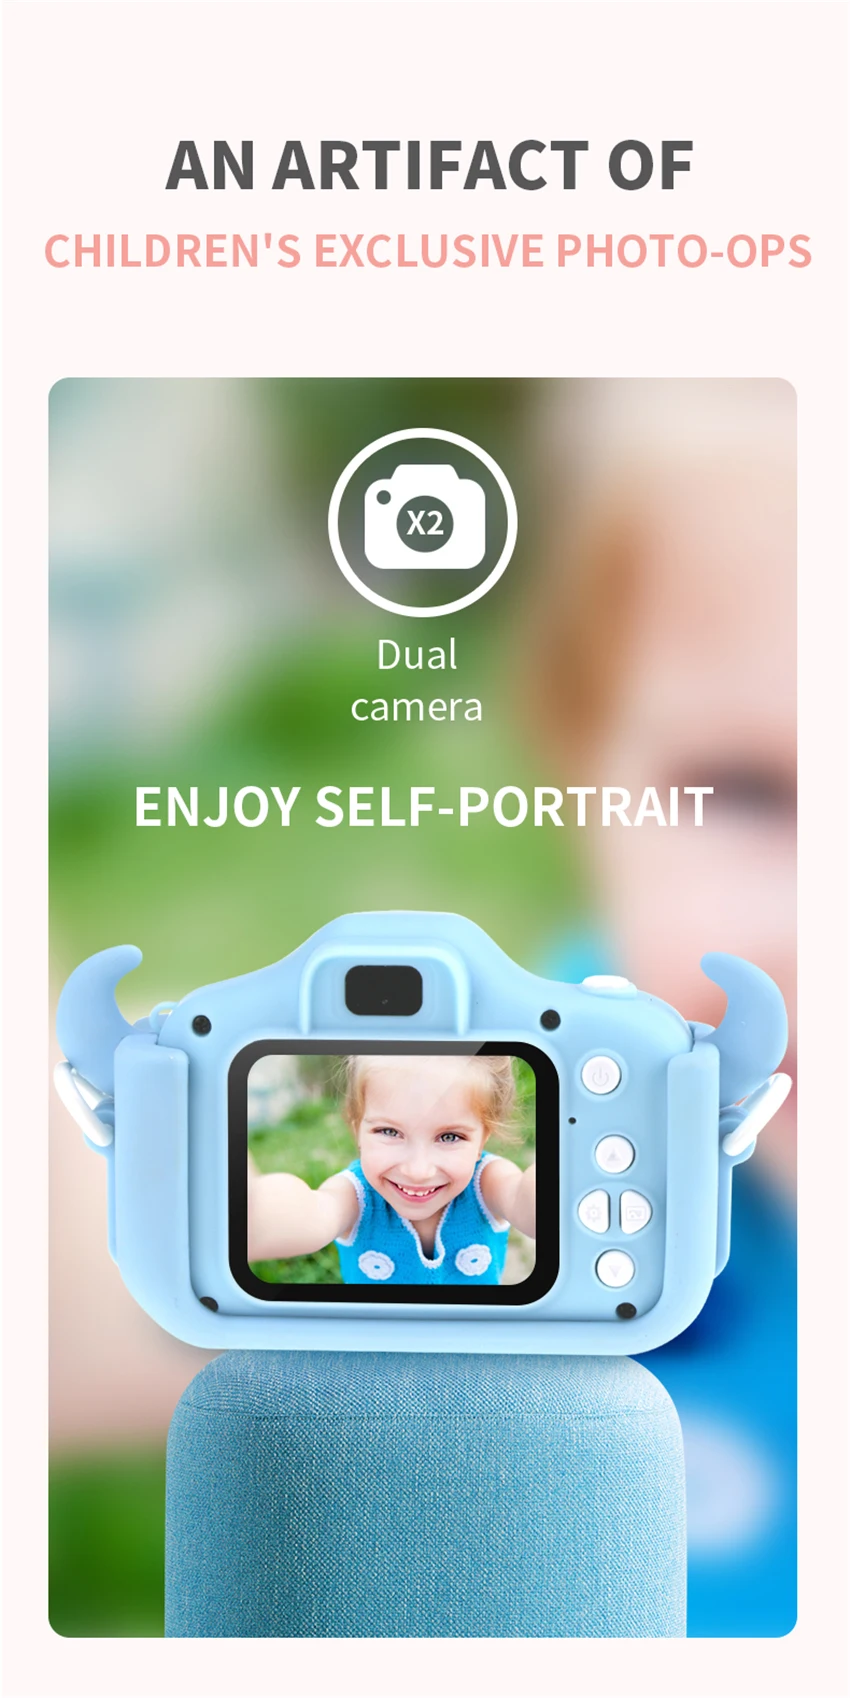 Детская Мини WiFi камера цифровая Водонепроницаемая HD 12MP 2,0 дюймов фото-, видеокамера USB TF Baby Small SLR подарок для детей Новинка